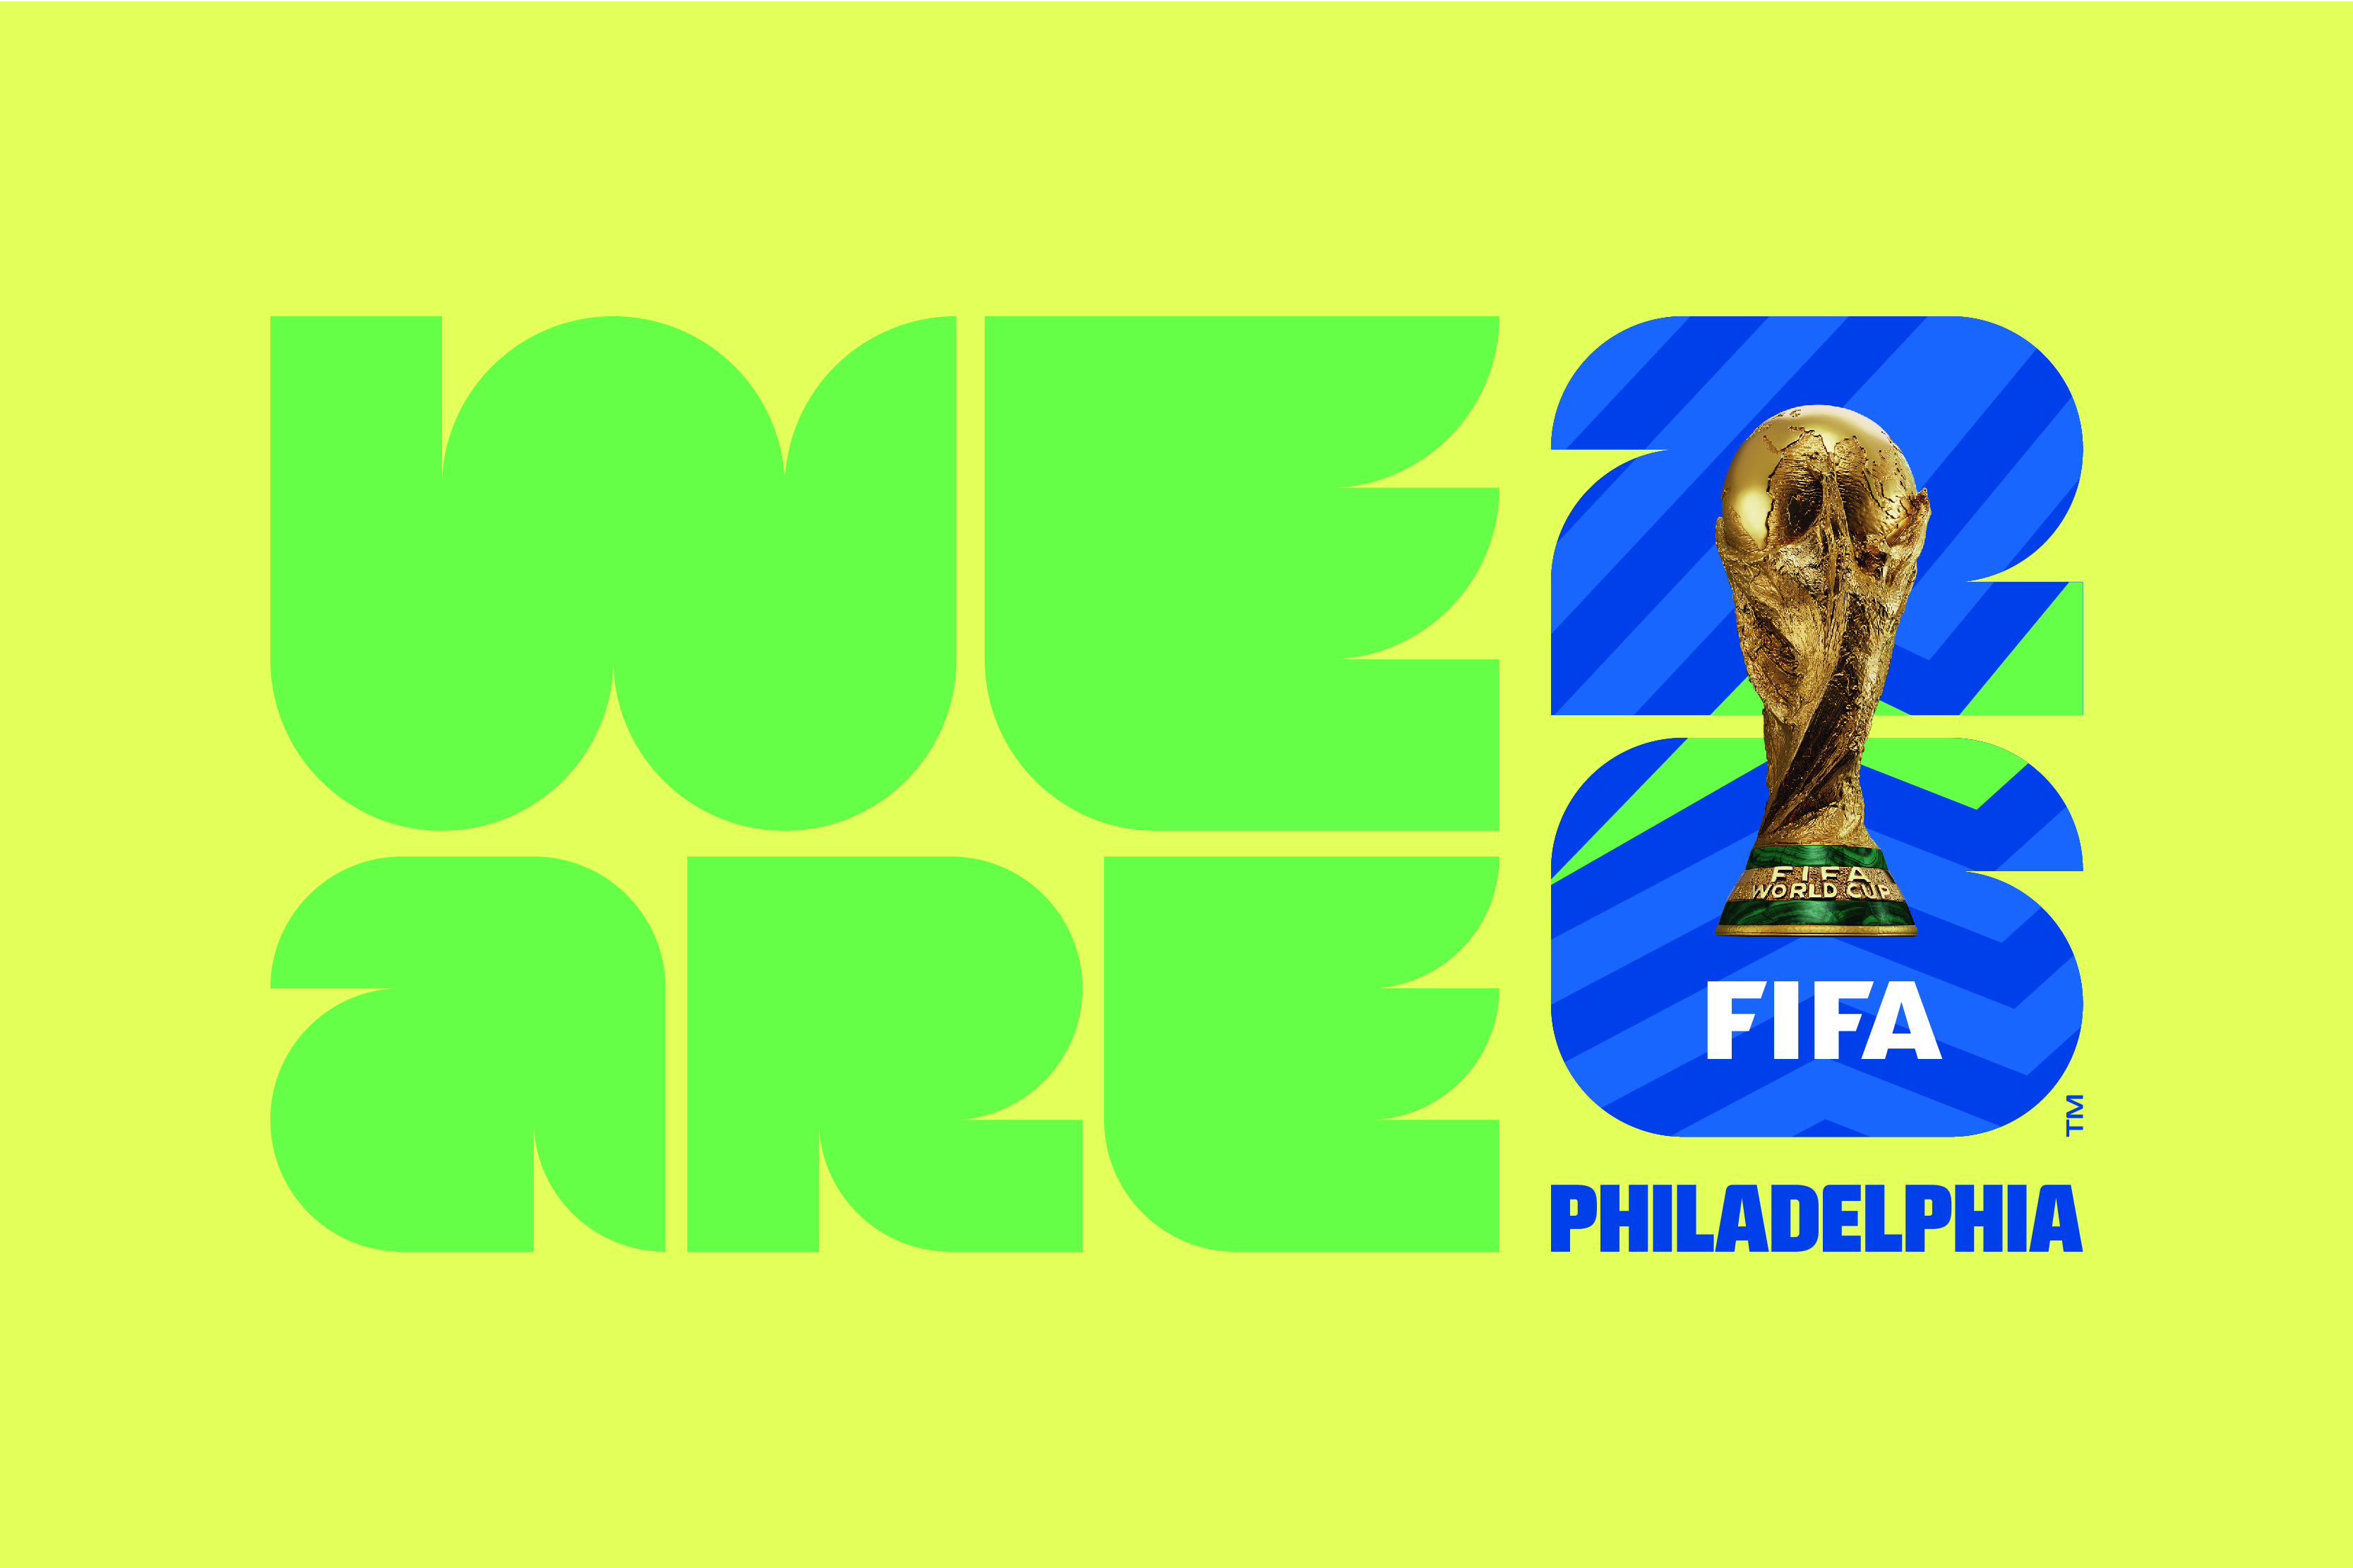 jamaica world cup logo